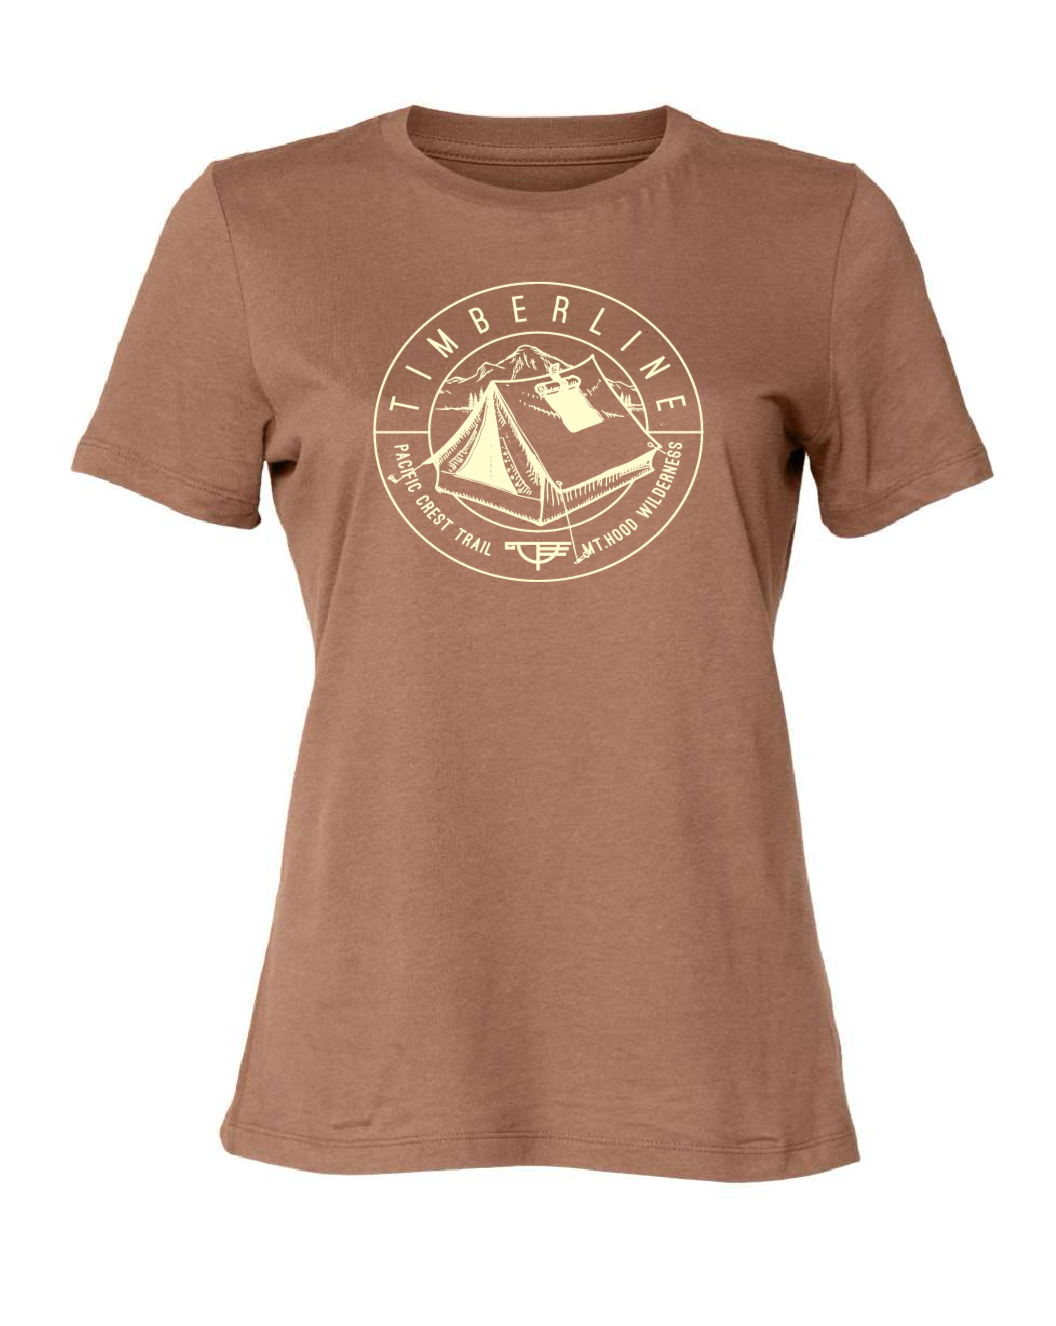 Pacific Crest Trail Women's Cut Short Sleeve T-Shirt - Chestnut